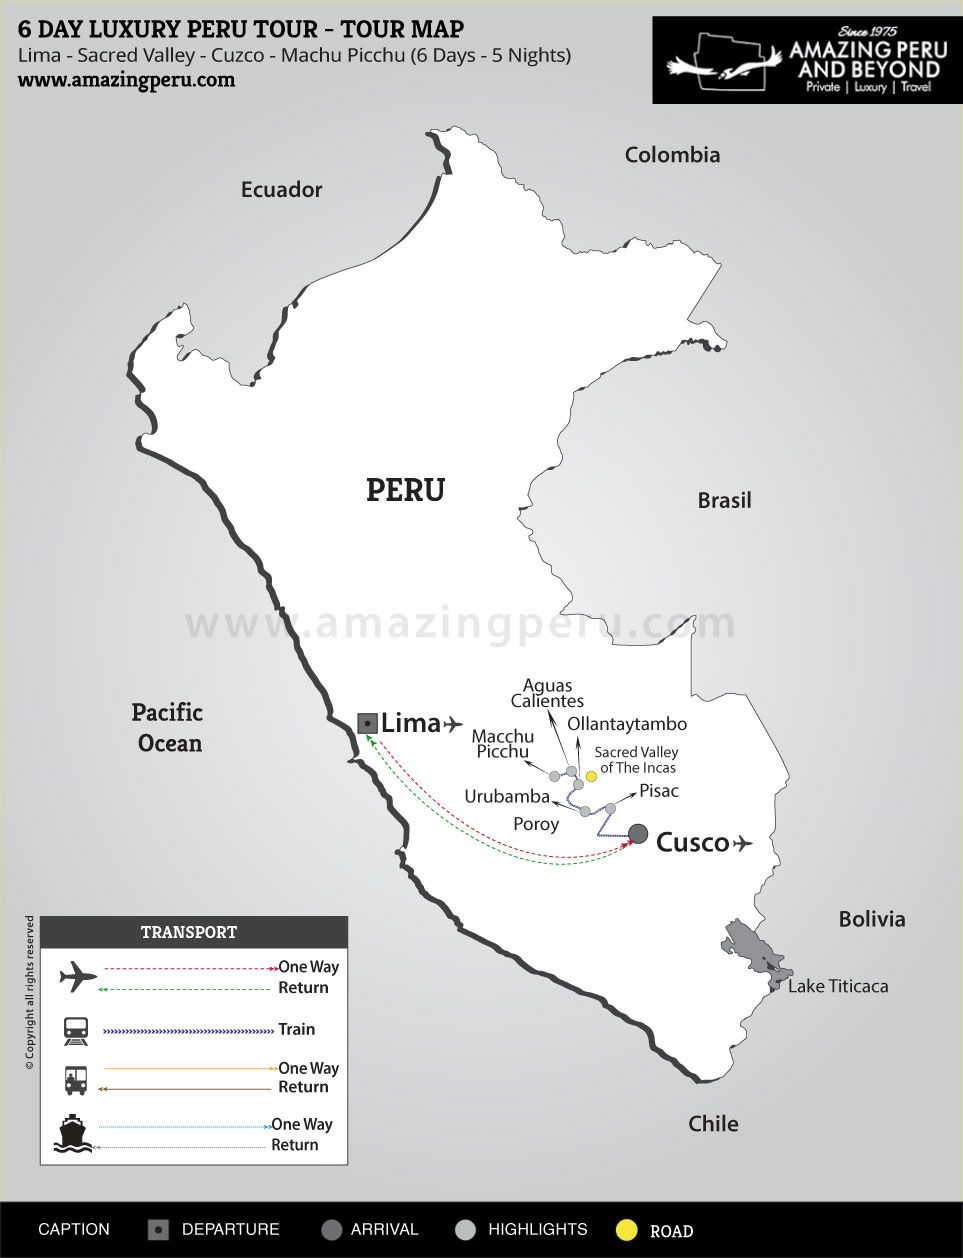 Tour Map Luxury Peru